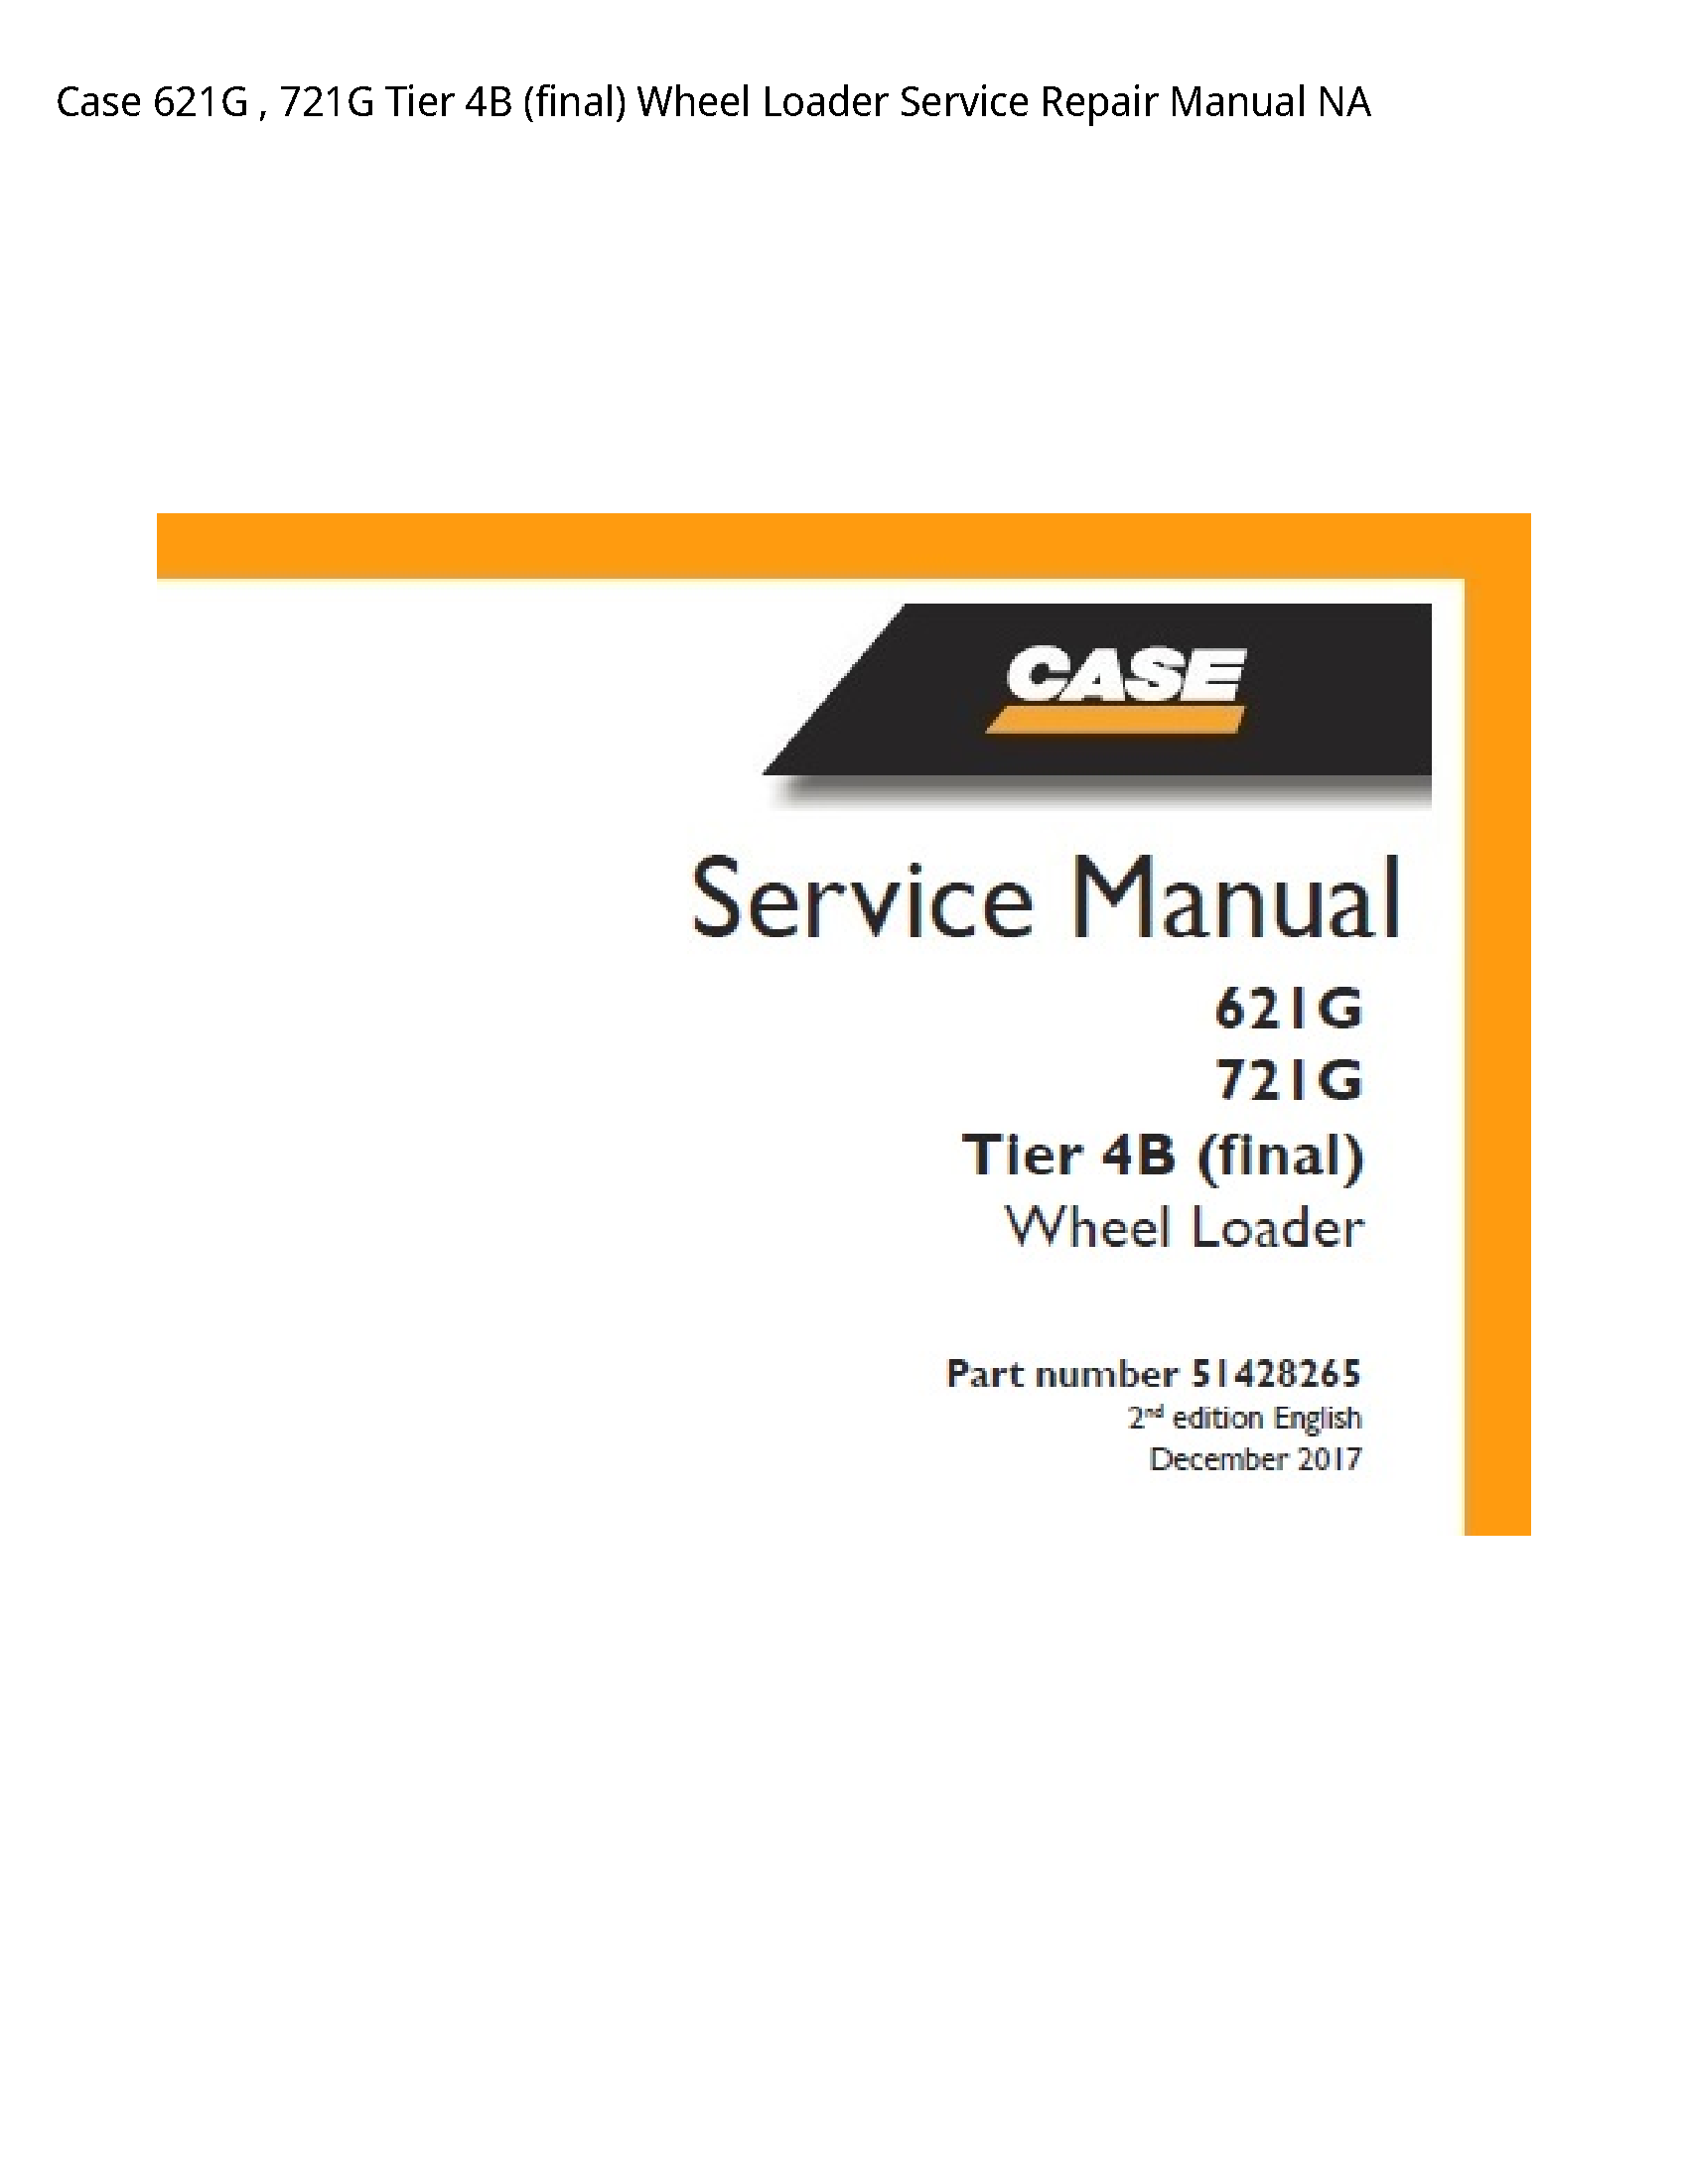 Case/Case IH 621G Tier (final) Wheel Loader manual